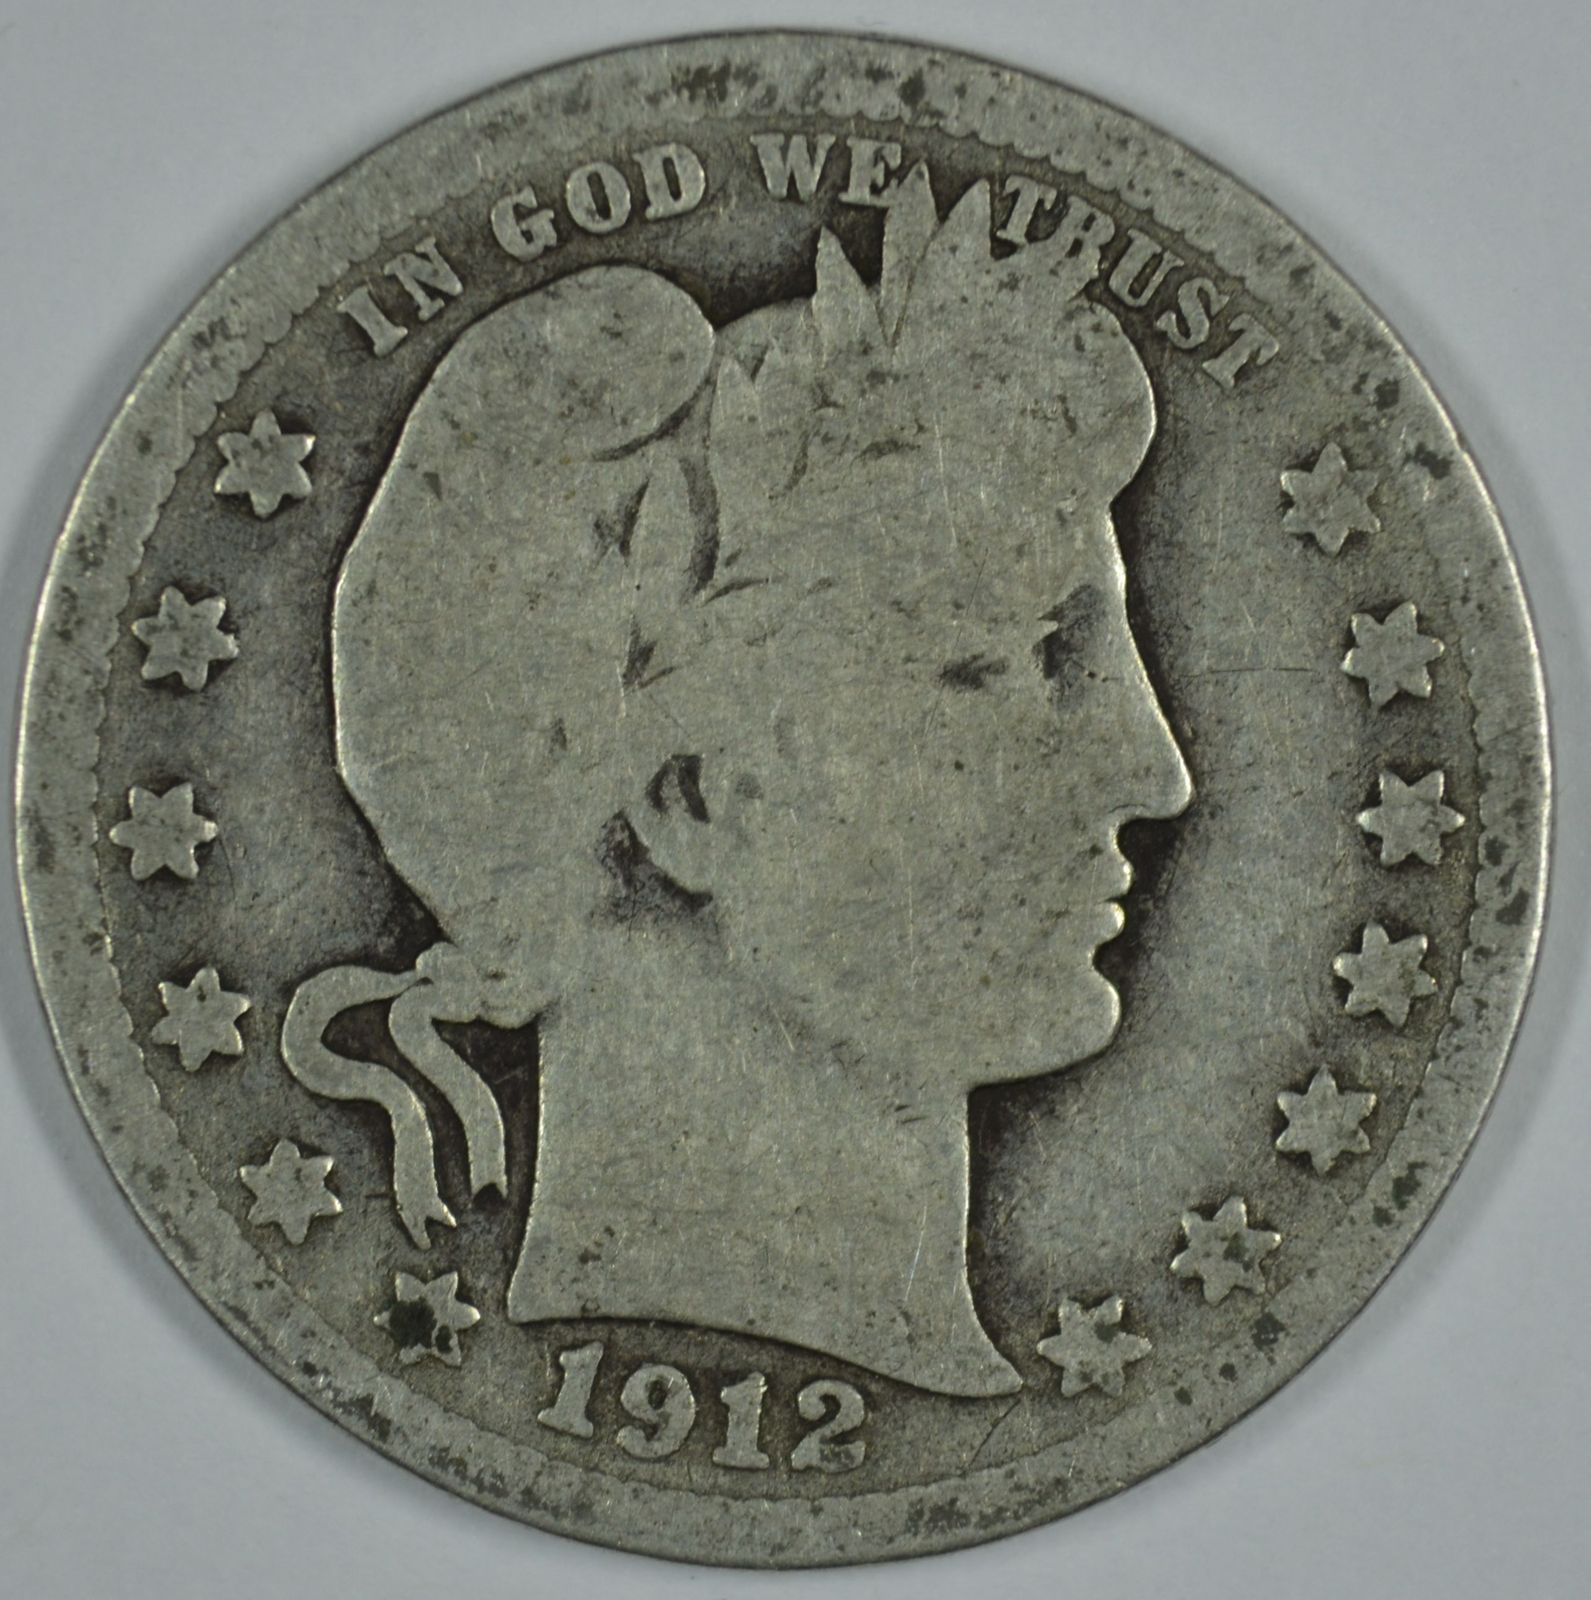 1912 P Barber circulated silver quarter - $12.00